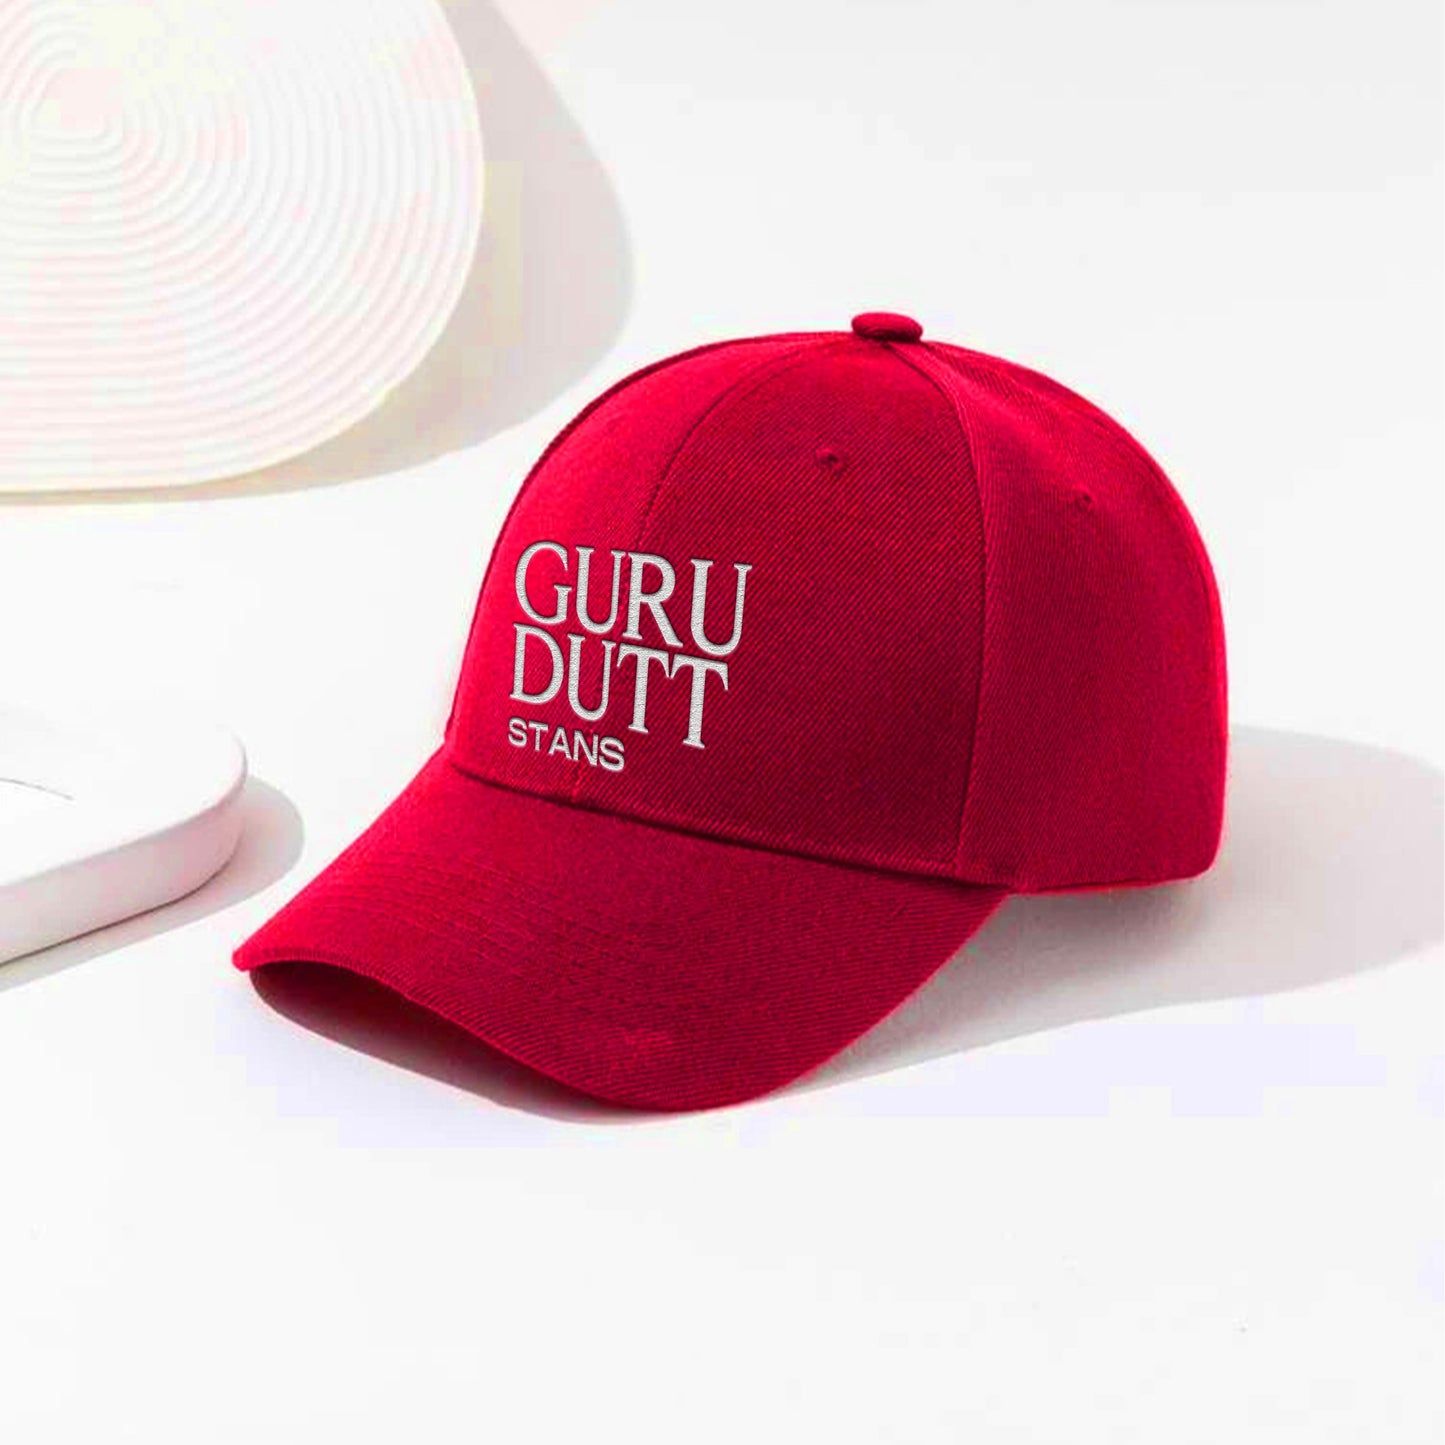 GURUDUTT STANS BASEBALL CAP